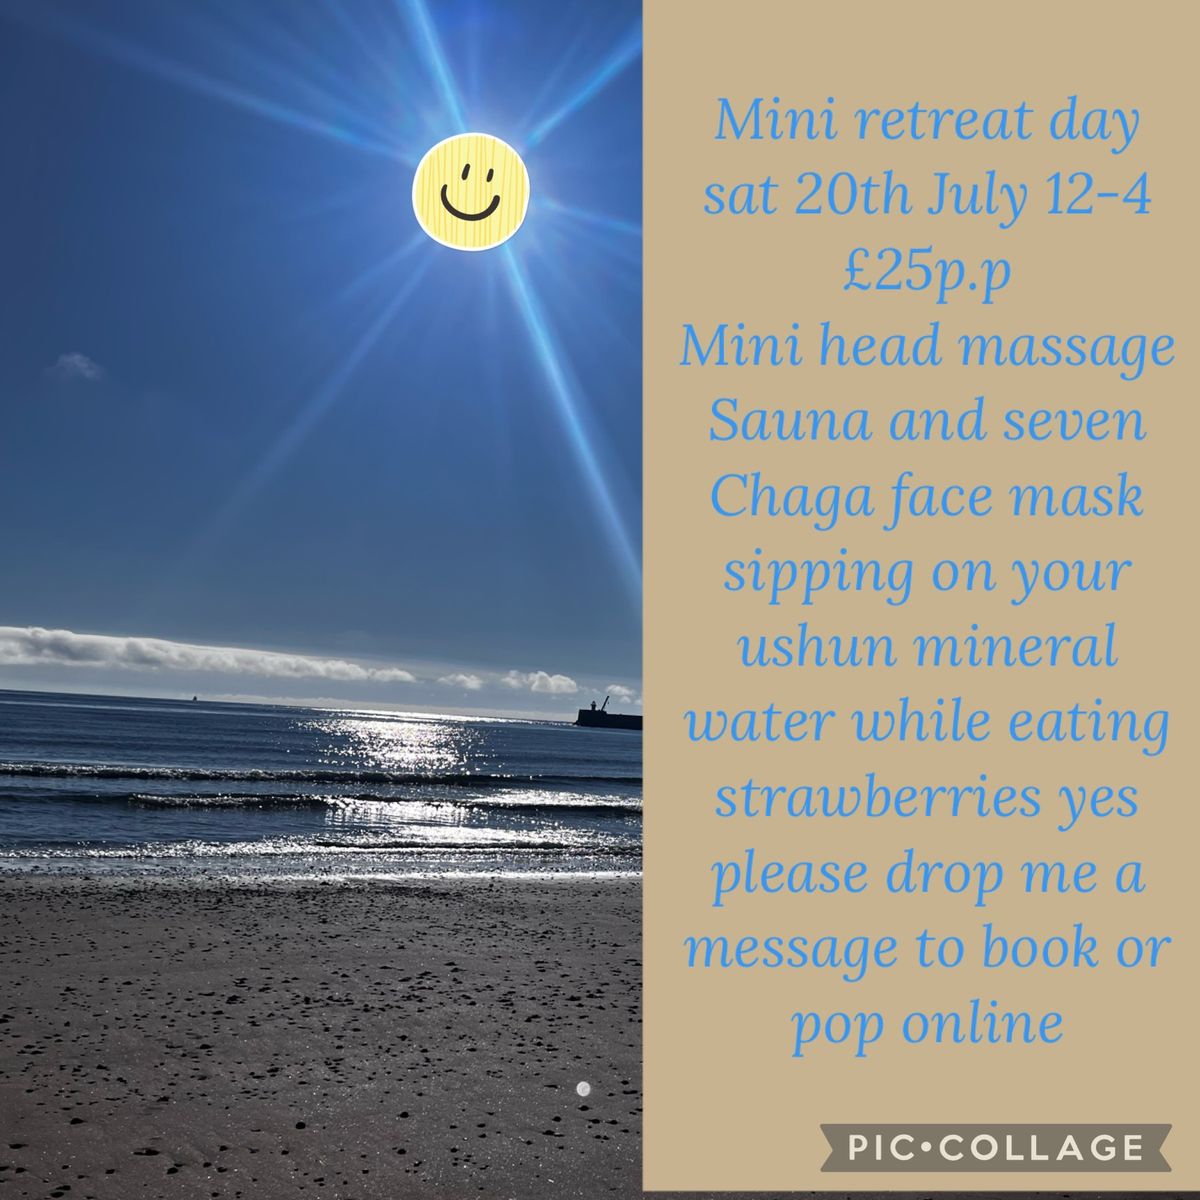 Mini retreat day at fittie beach 